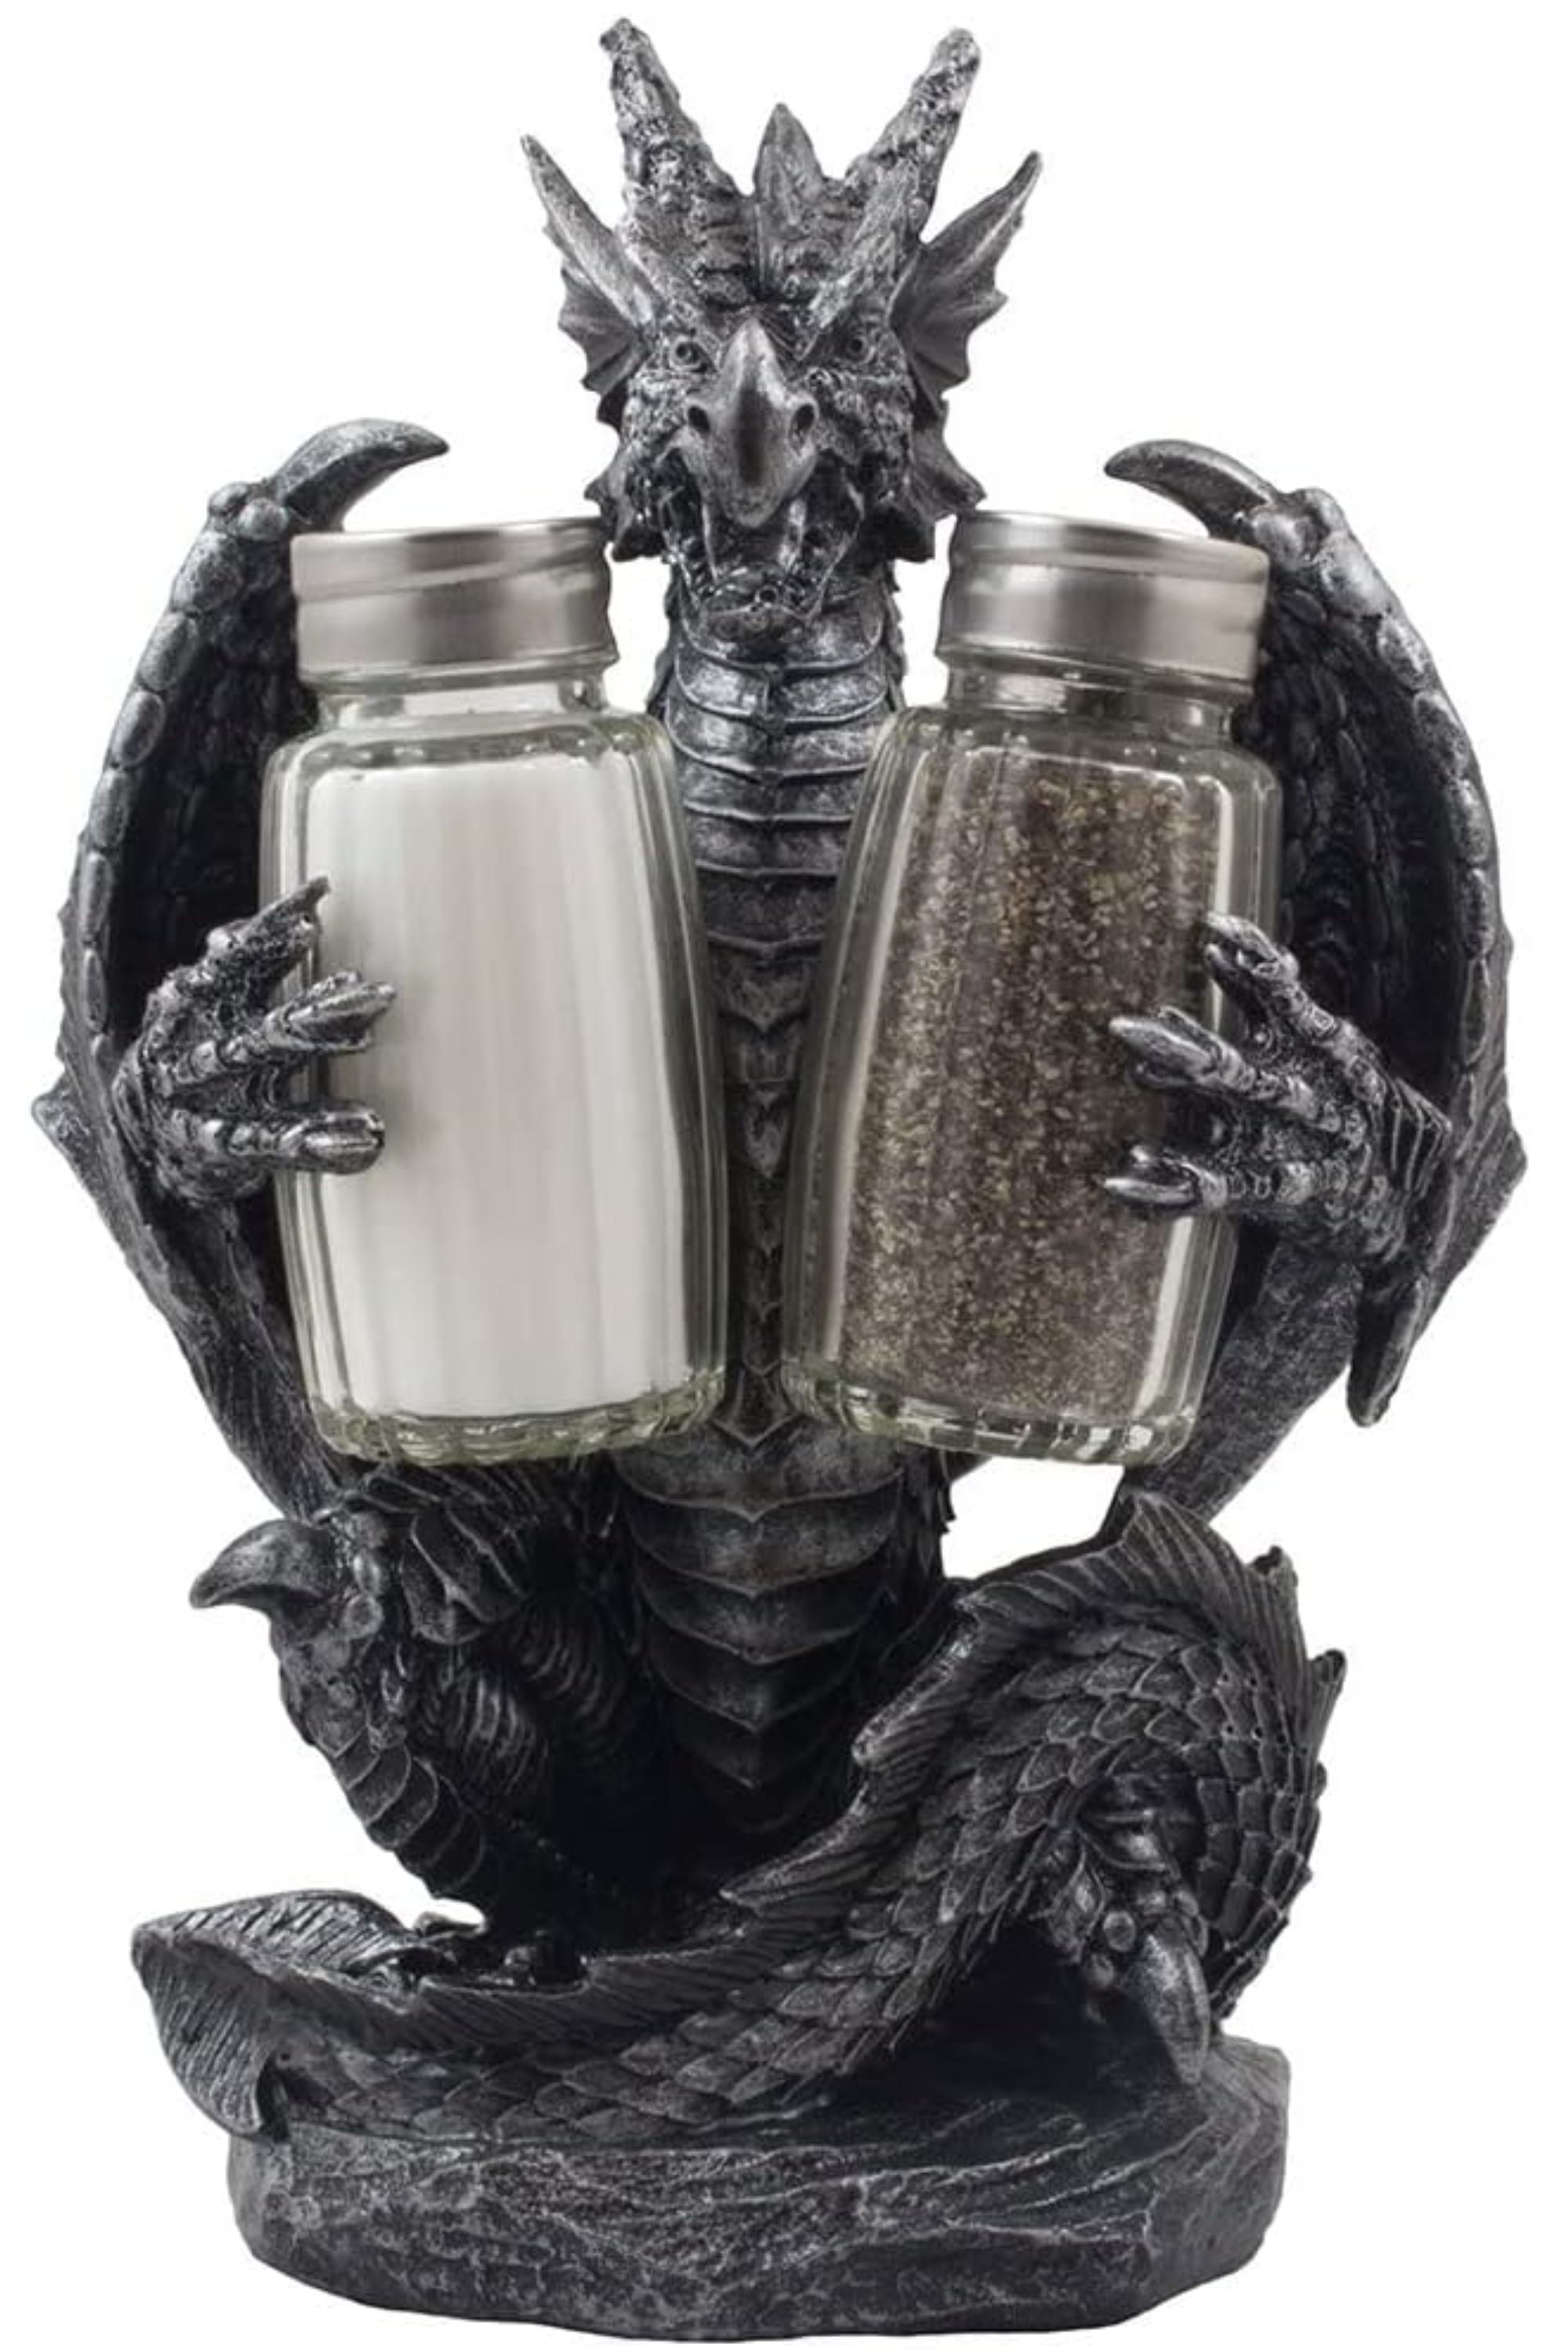 Mythical Dragon Salt and Pepper Shaker Set